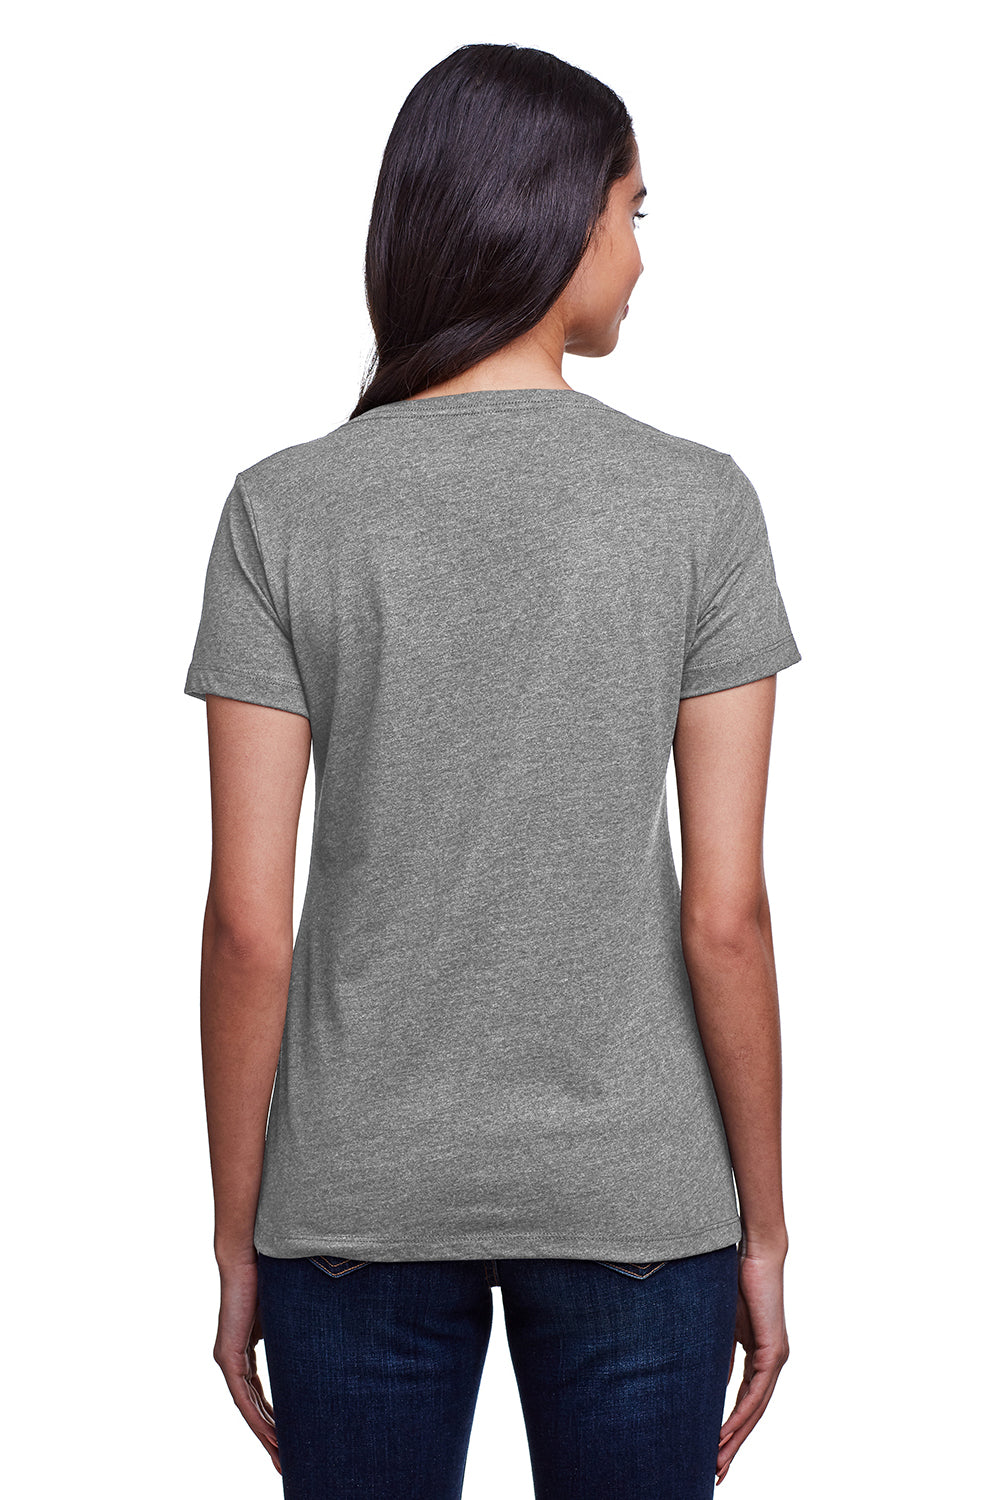 Next Level N4240 Womens Eco Performance Moisture Wicking Short Sleeve V-Neck T-Shirt Heather Dark Grey Back